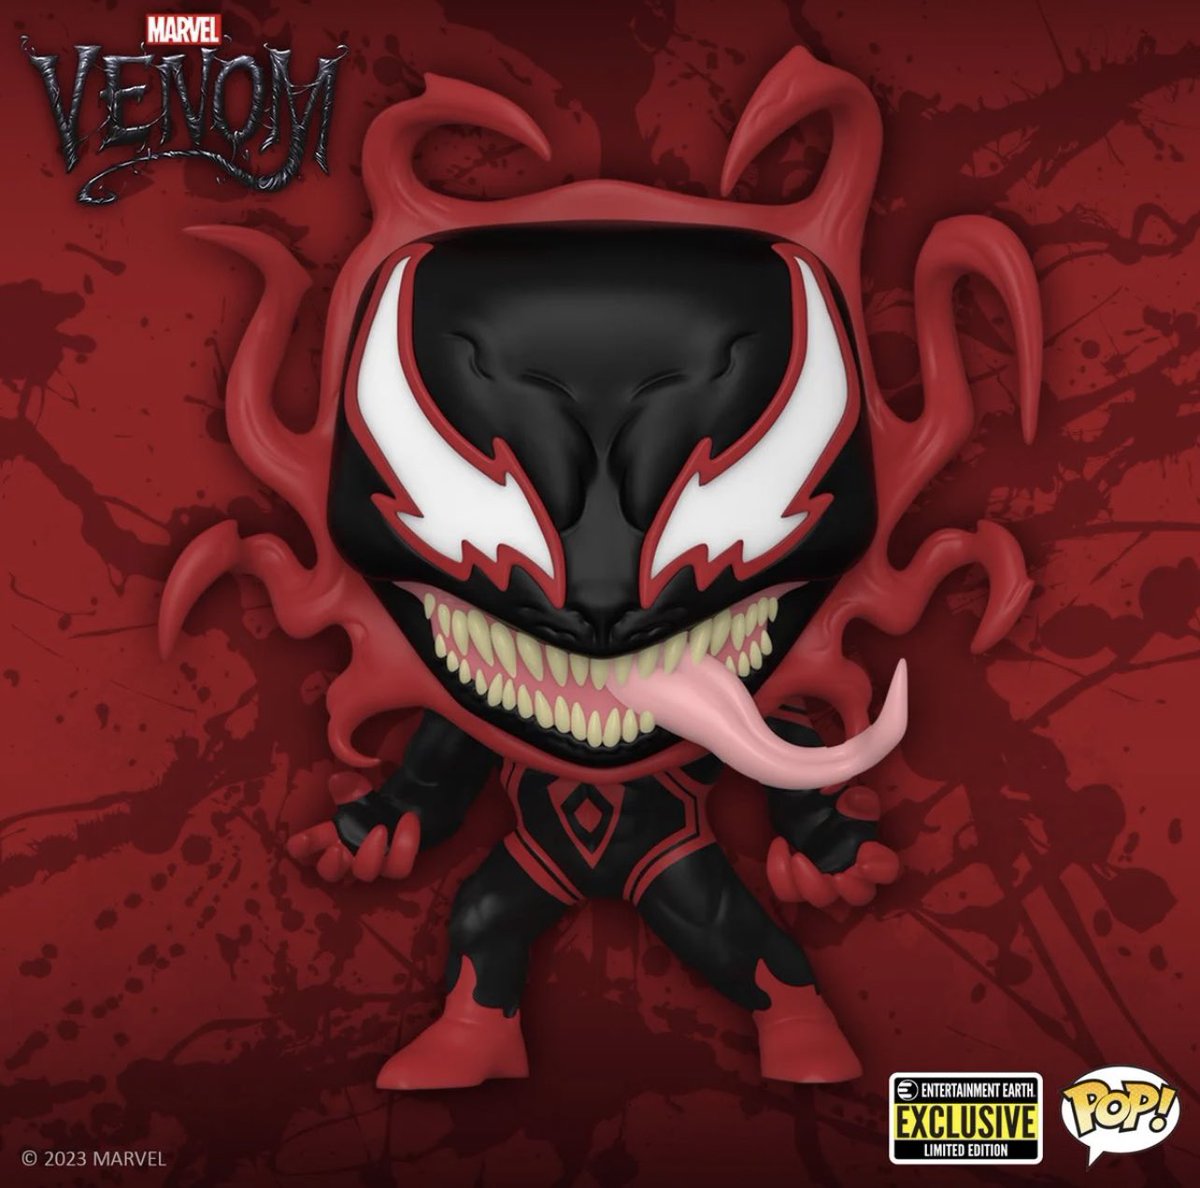 Miles Morales Venom/Carnage from Dark Ages Funko POP exclusive to EntertainmentEarth

entertainmentearth.com/product/venom-…